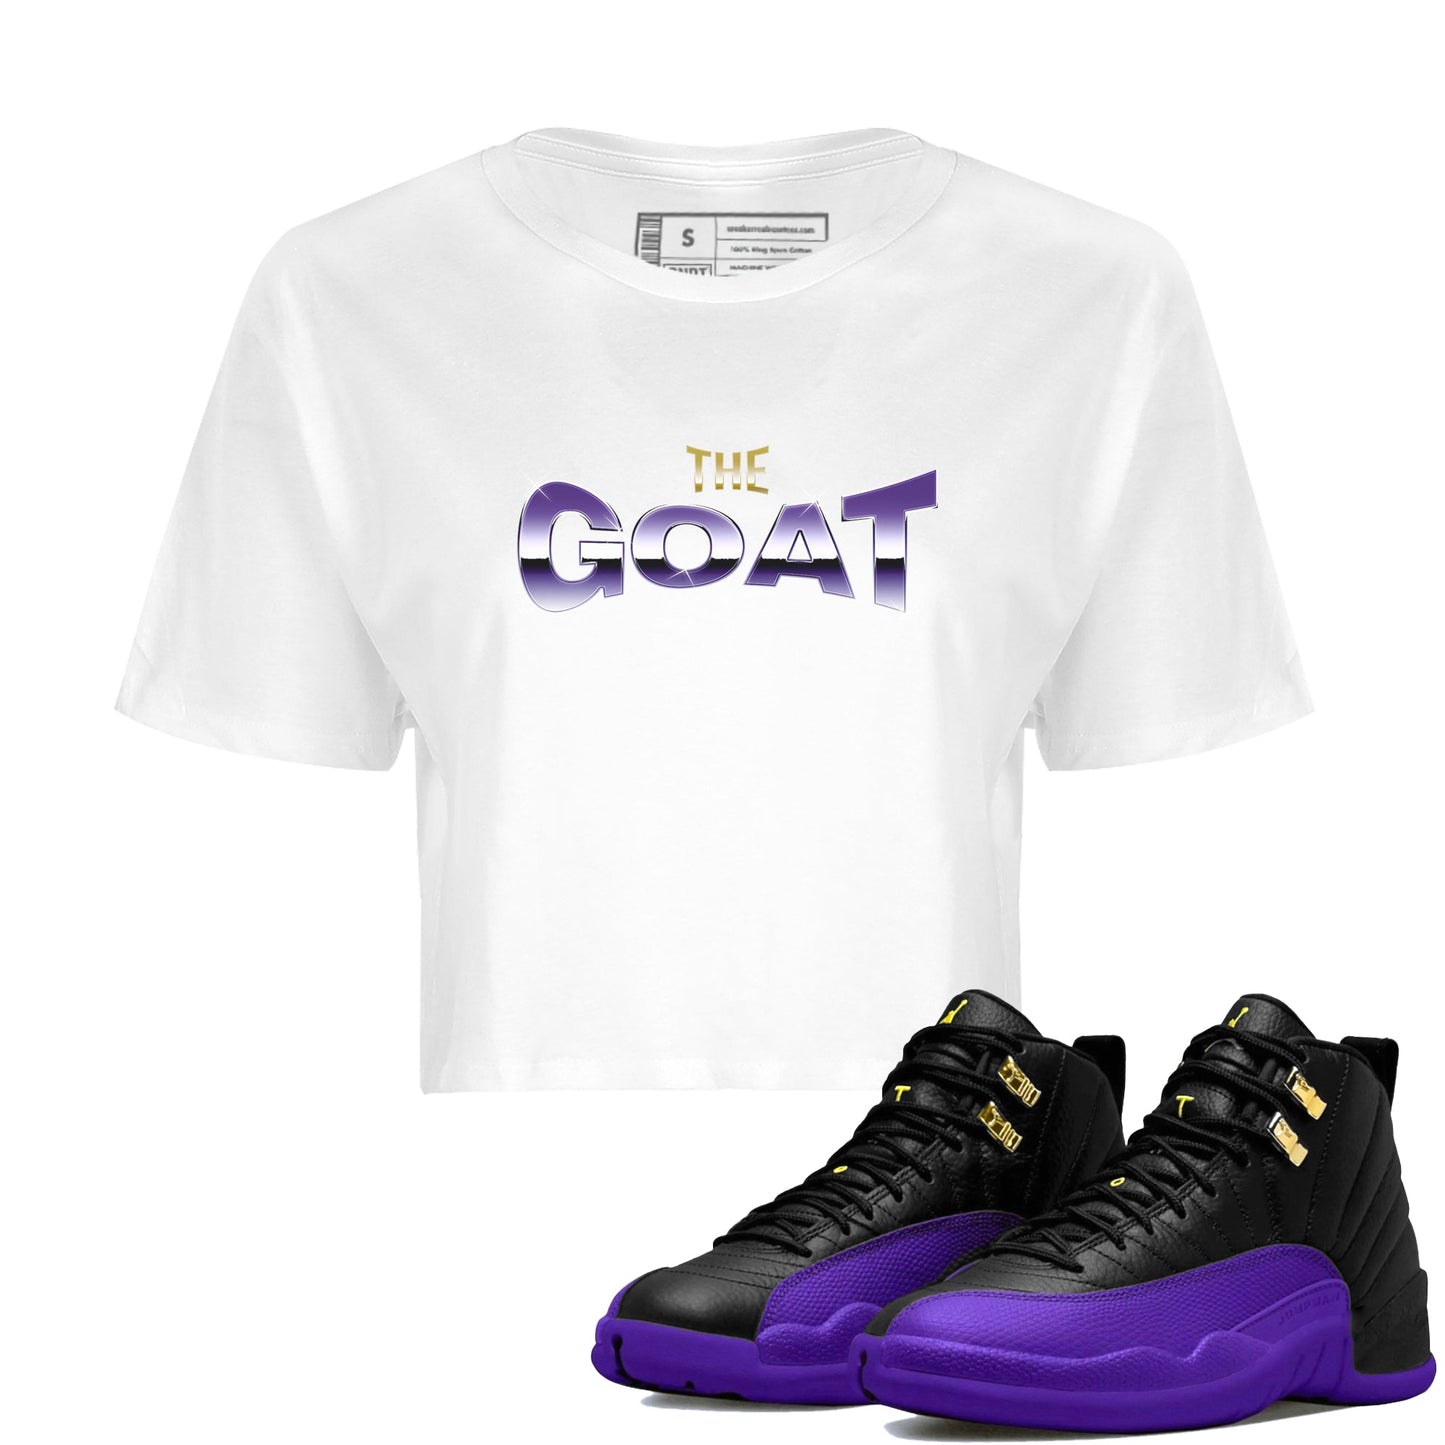 Air Jordan 12 Field Purple Sneaker Match Tees The Goat Sneaker Tees AJ12 Field Purple Sneaker Release Tees Women's Shirts White 1